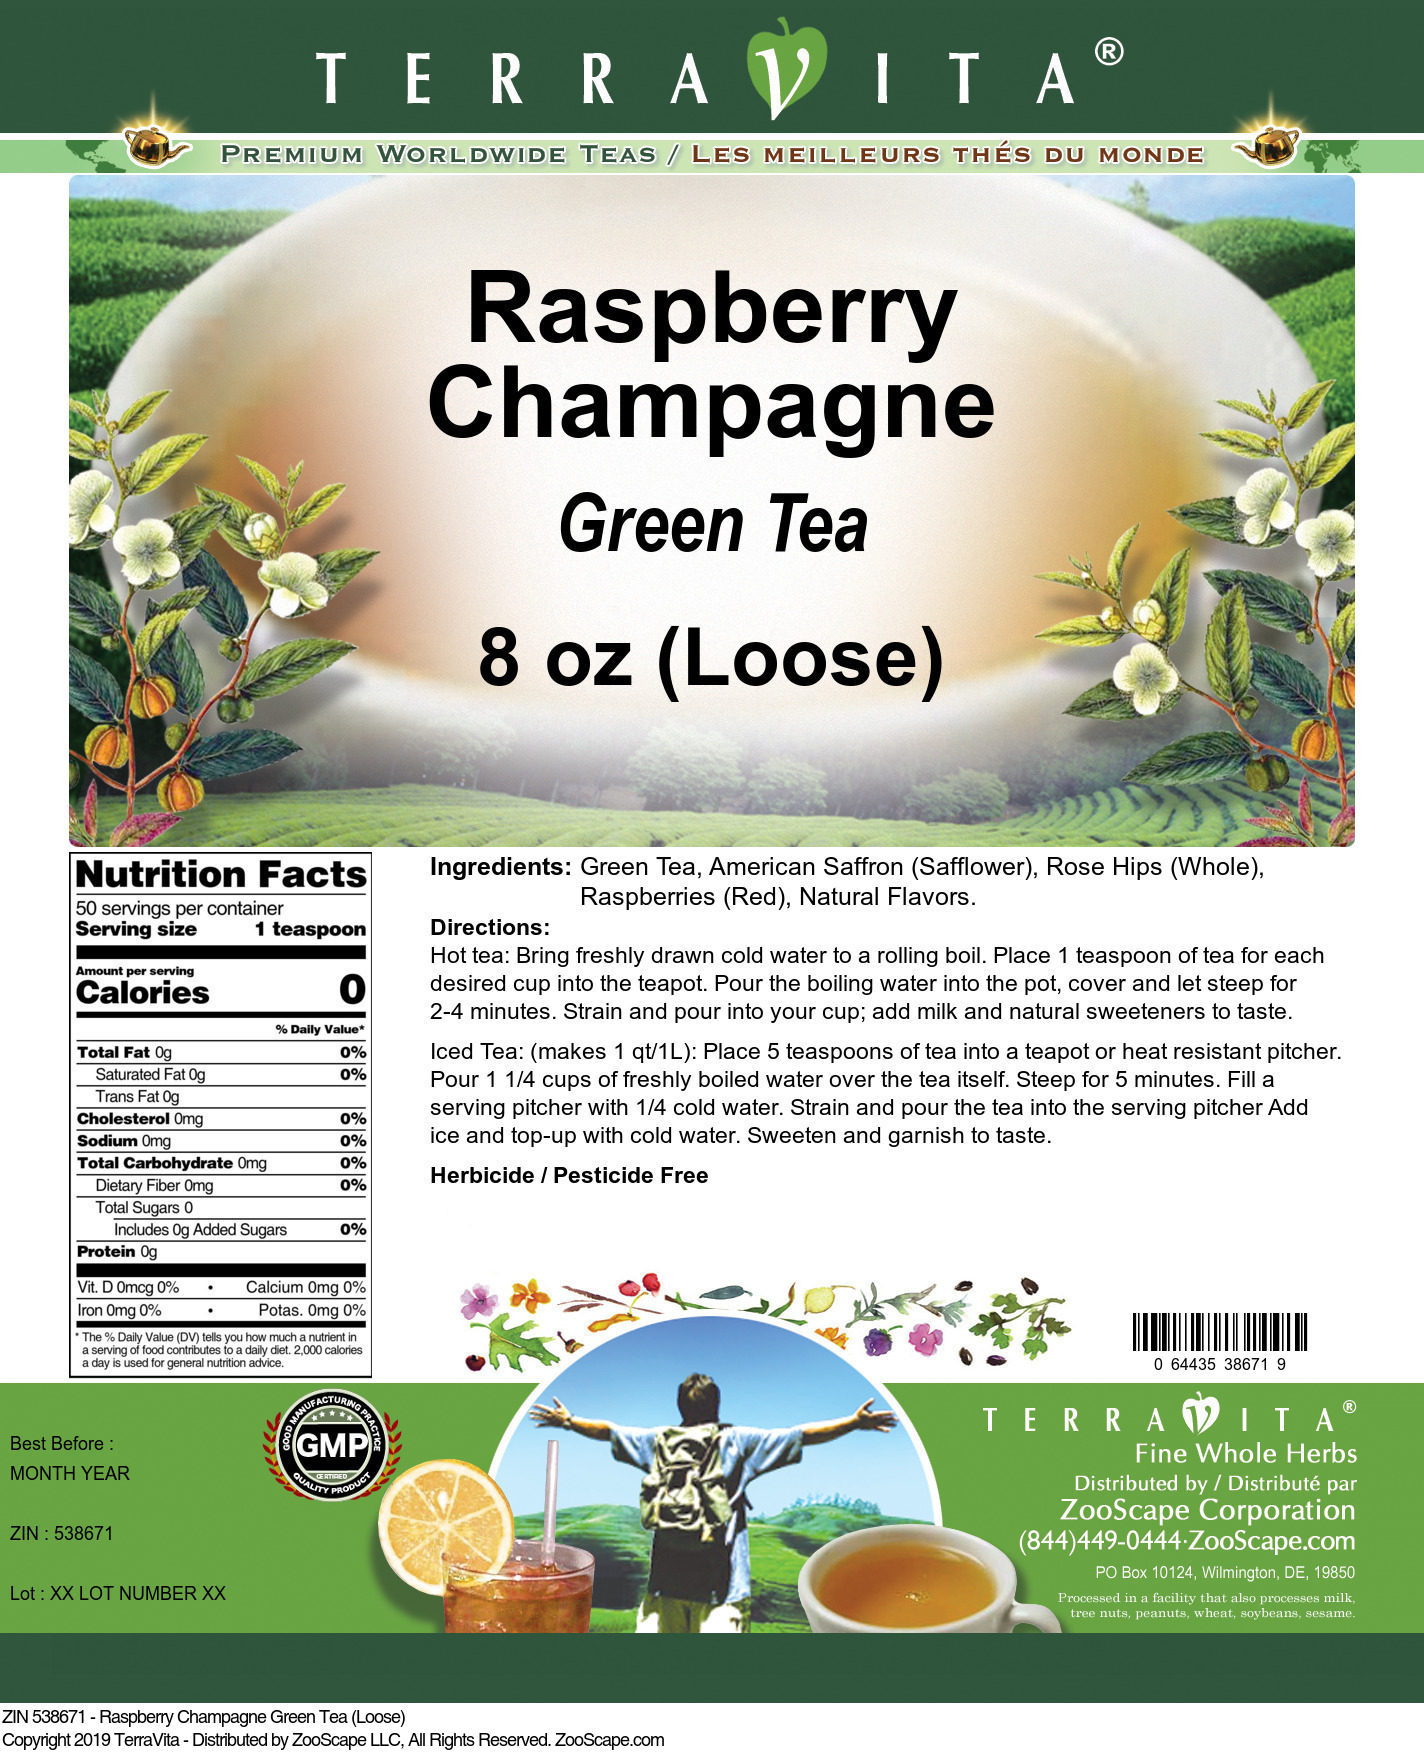 Raspberry Champagne Green Tea (Loose) - Label